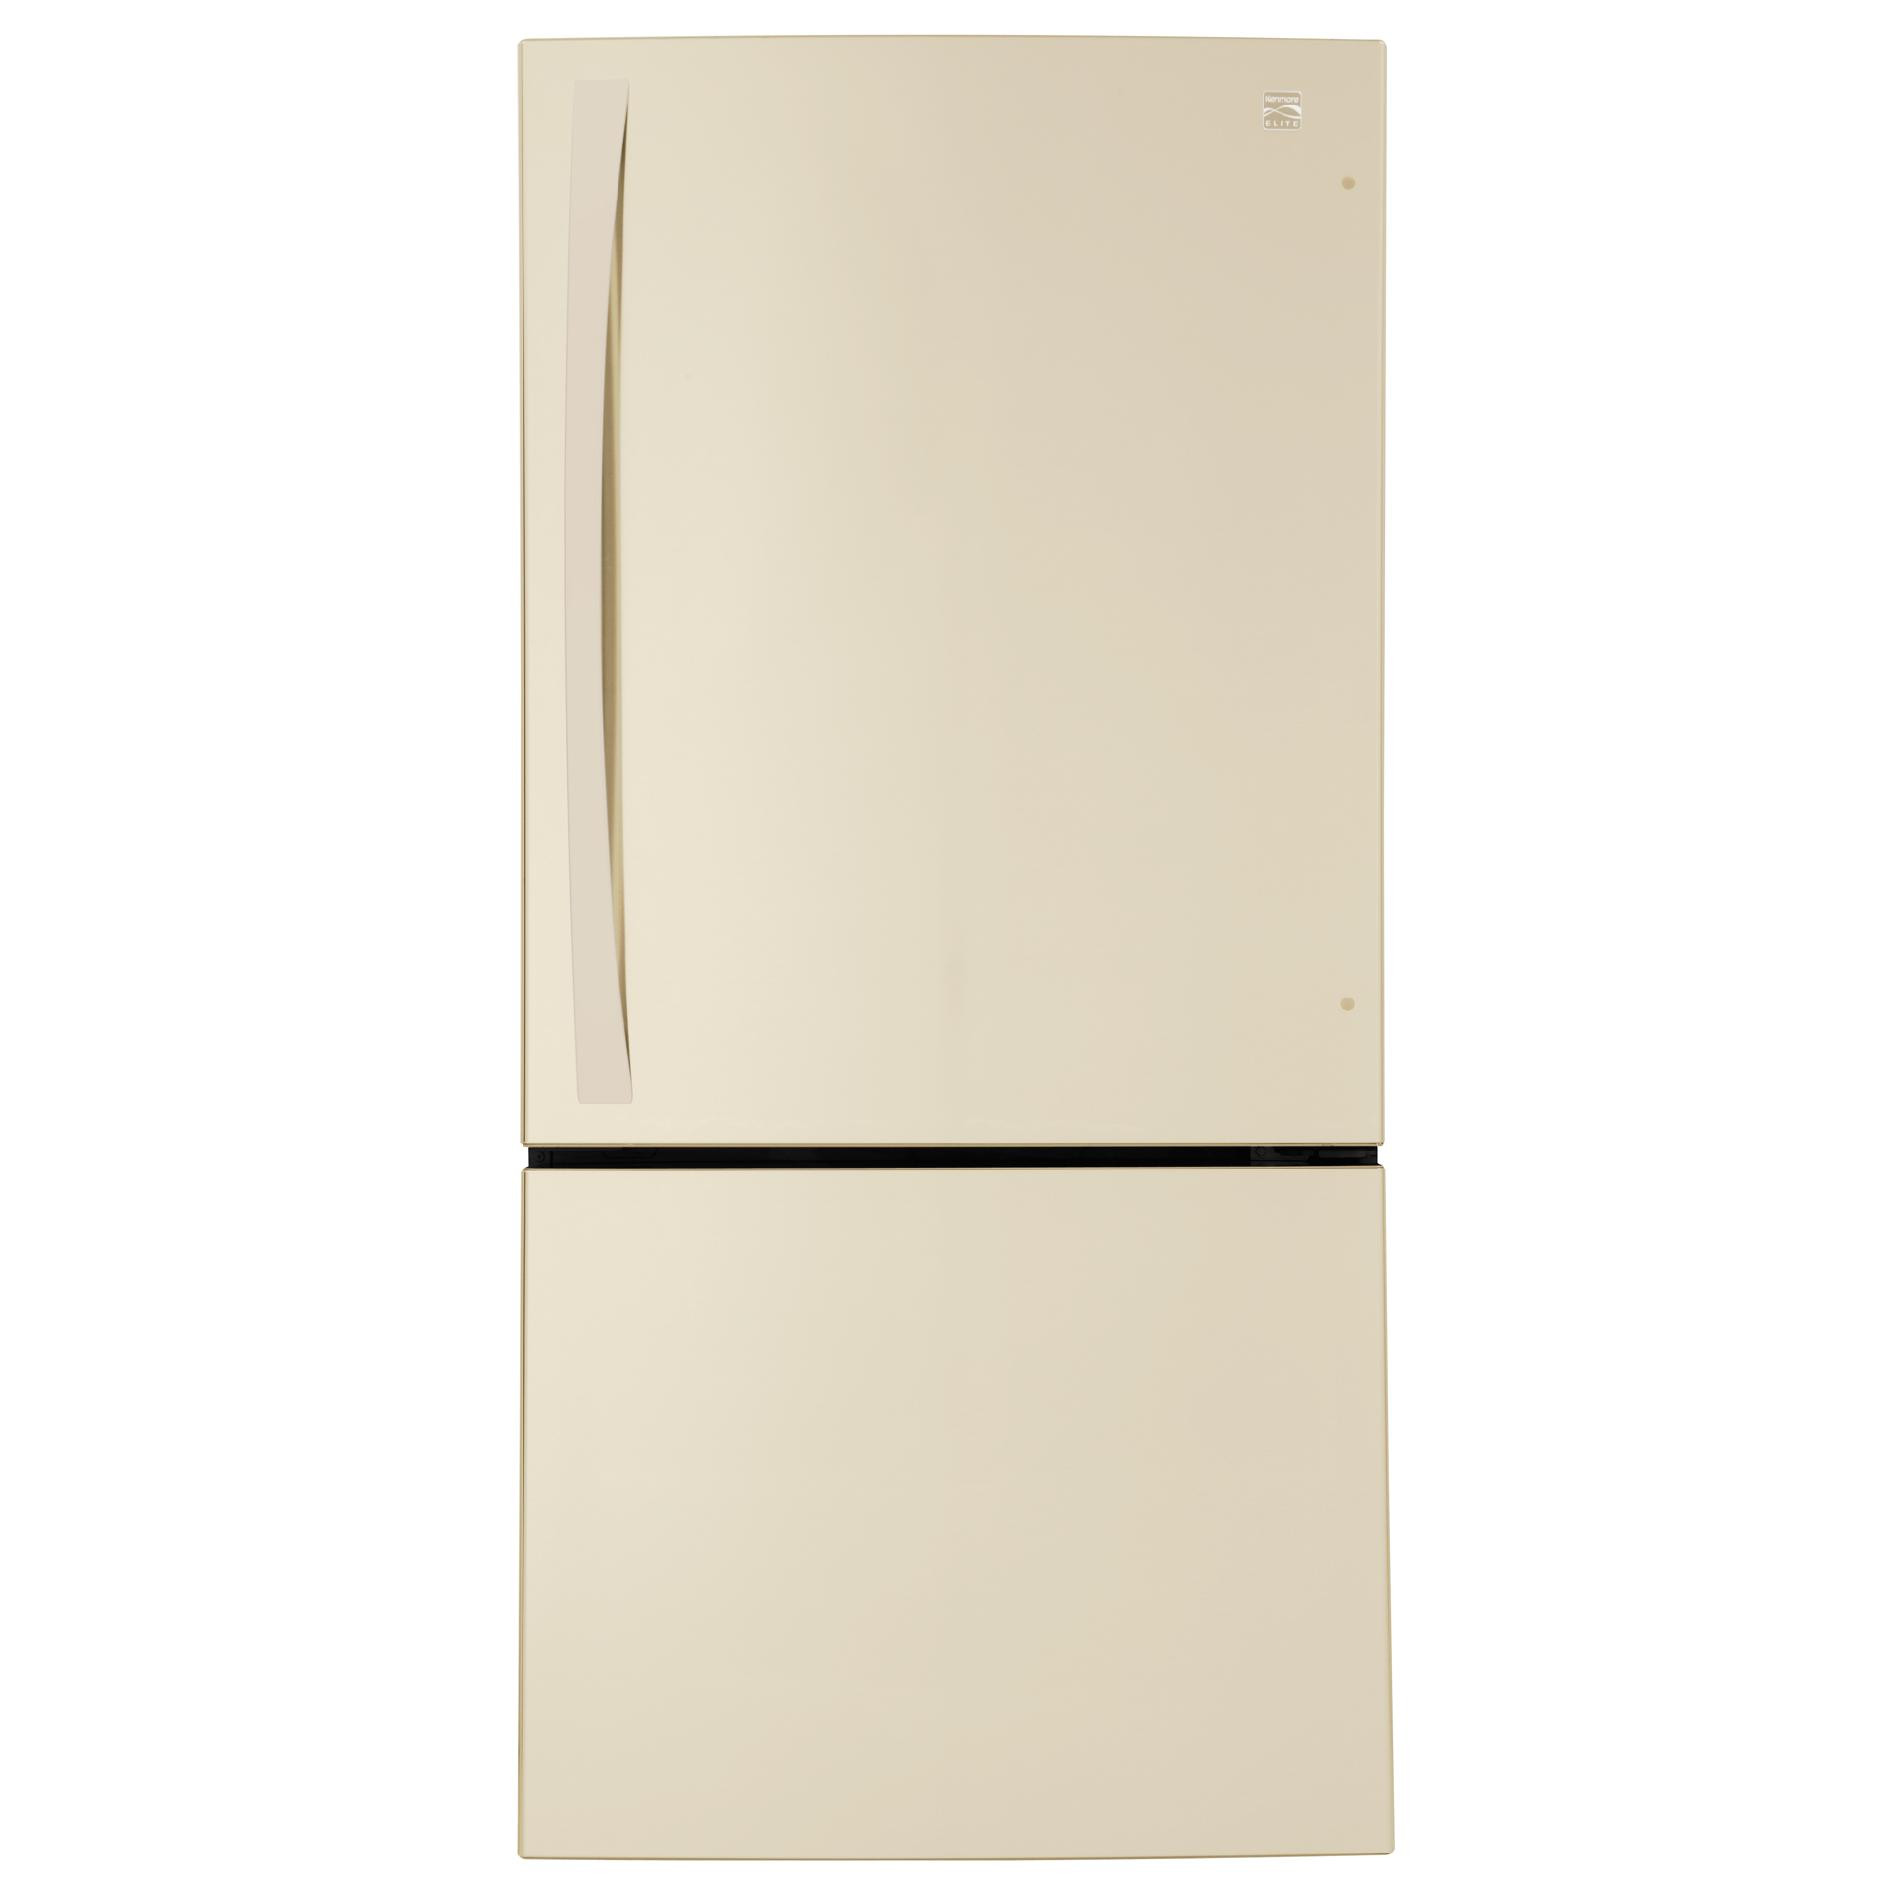 Bisque Refrigerator Bottom Freezer
 Kenmore Elite 24 1 cu ft Bottom Freezer